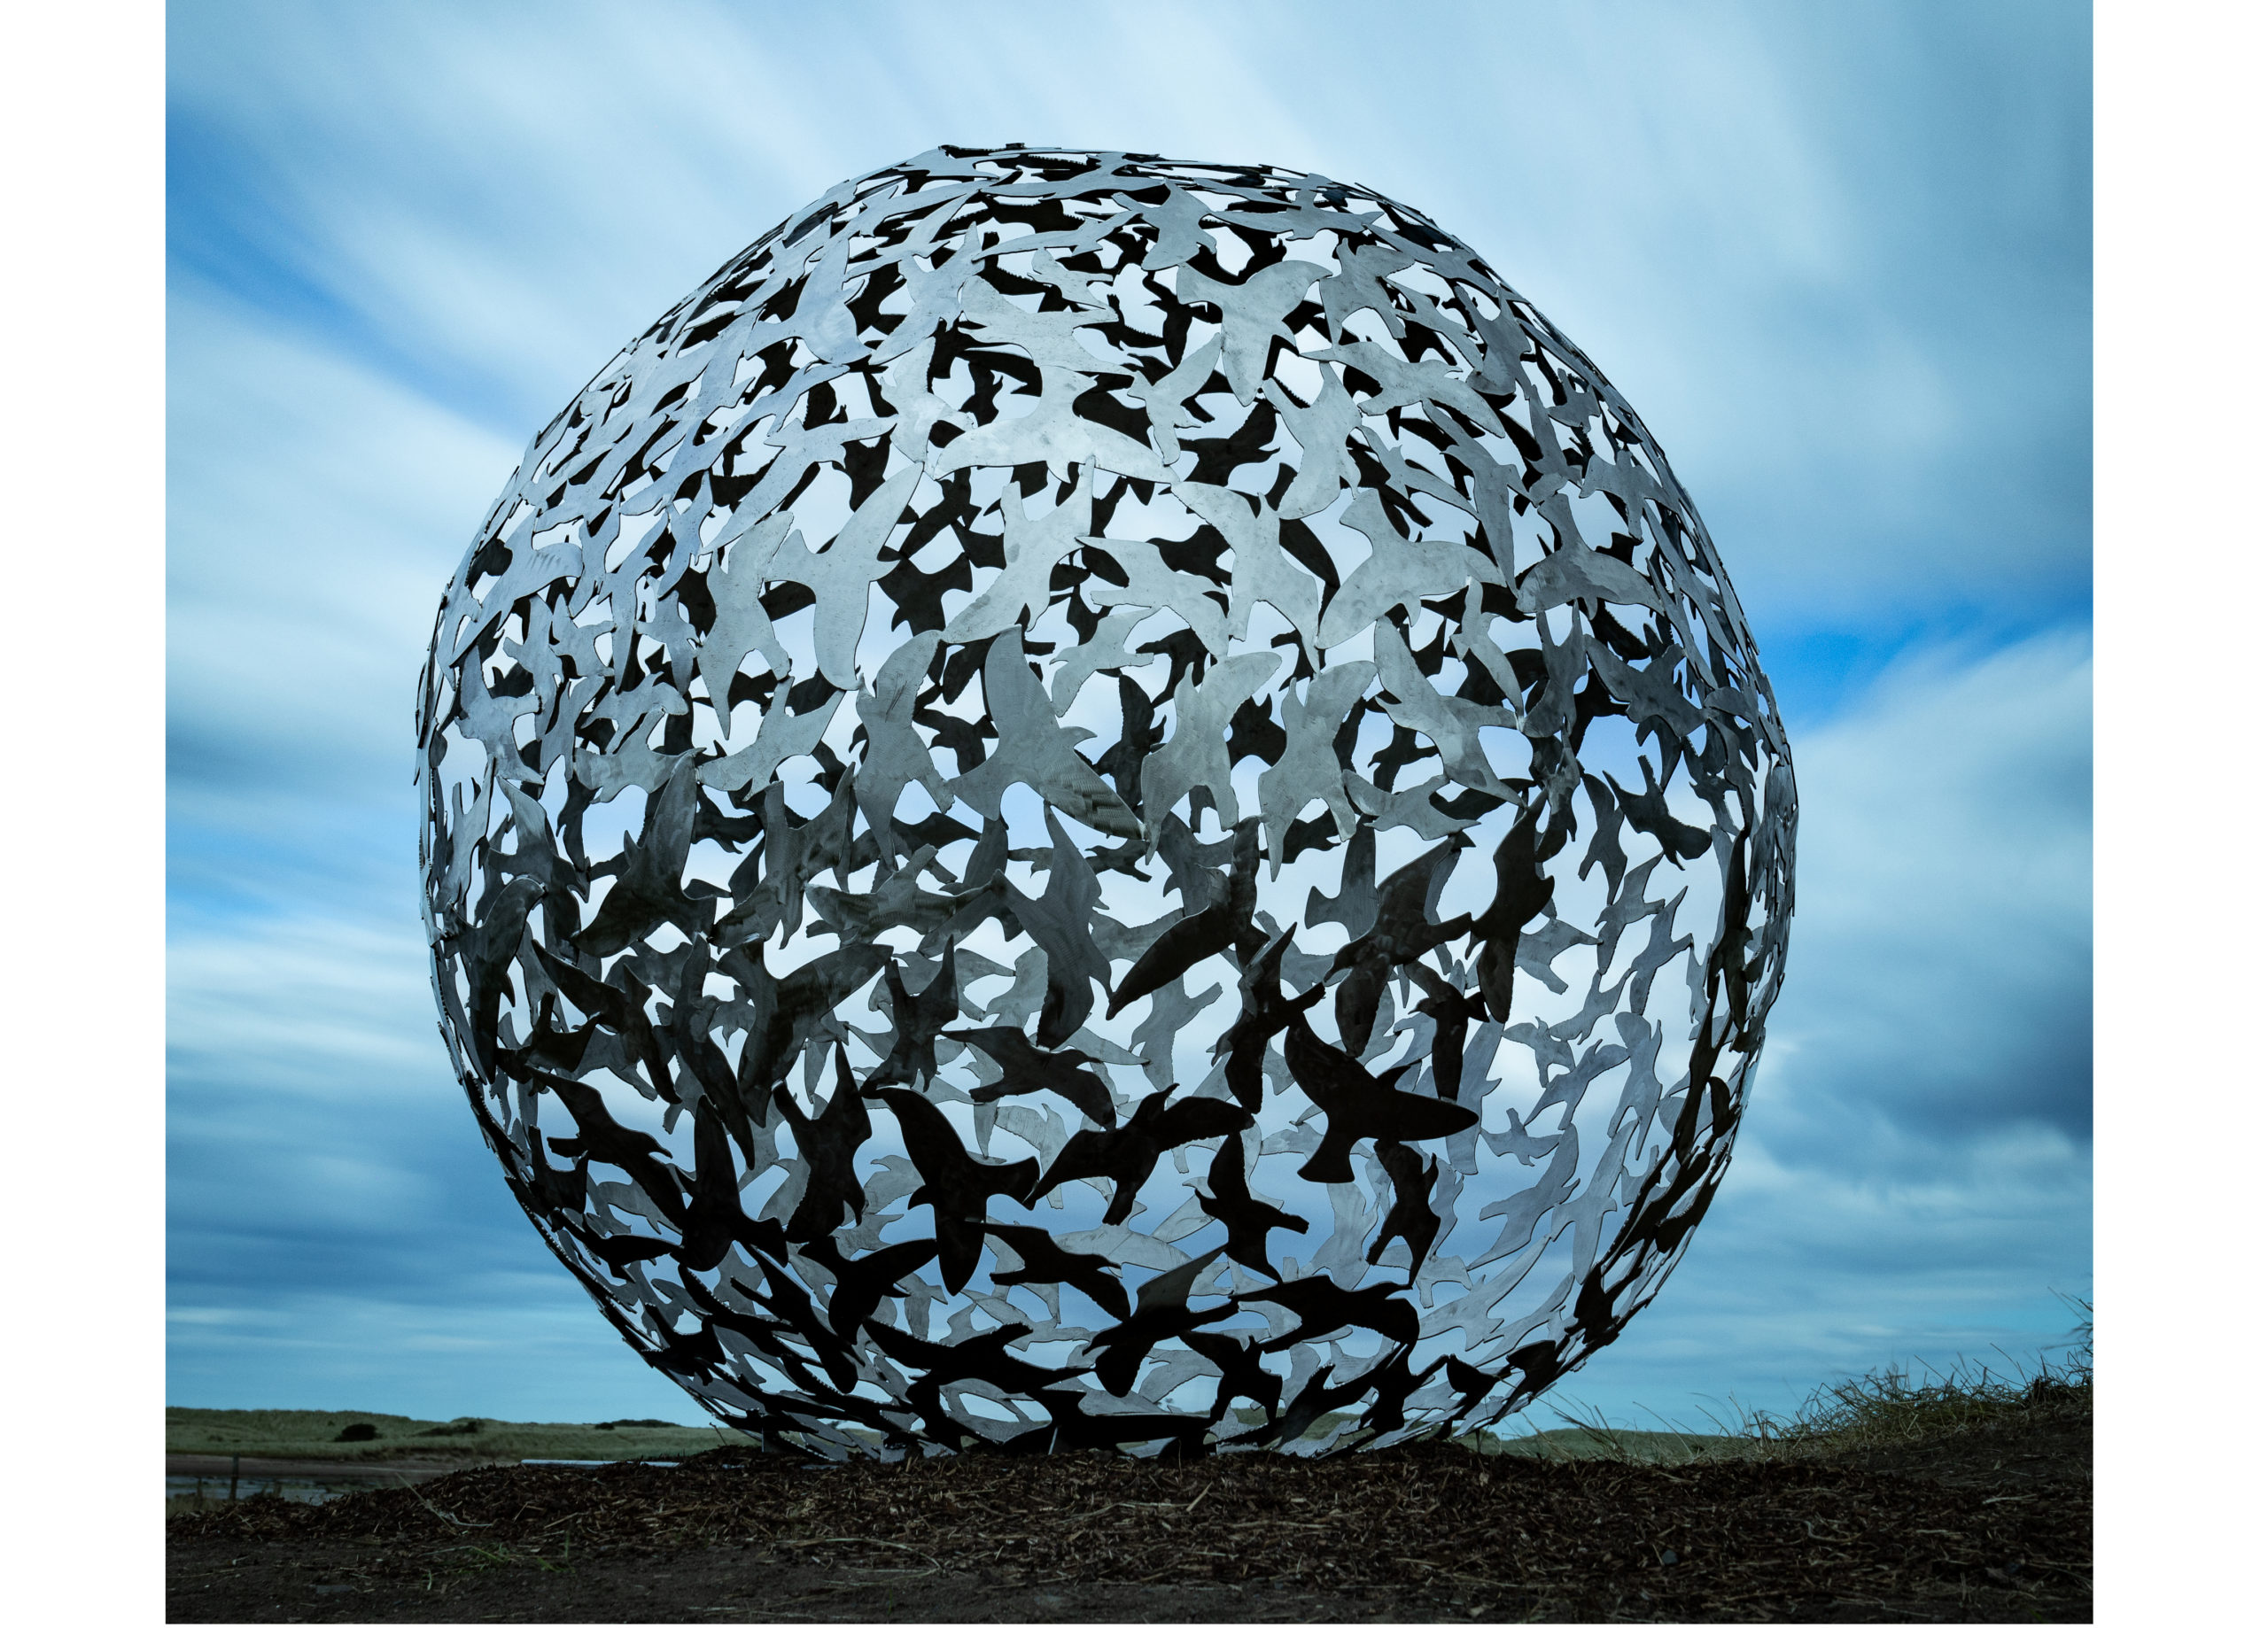 sculpture depicting a flock of birds in a spherical shape